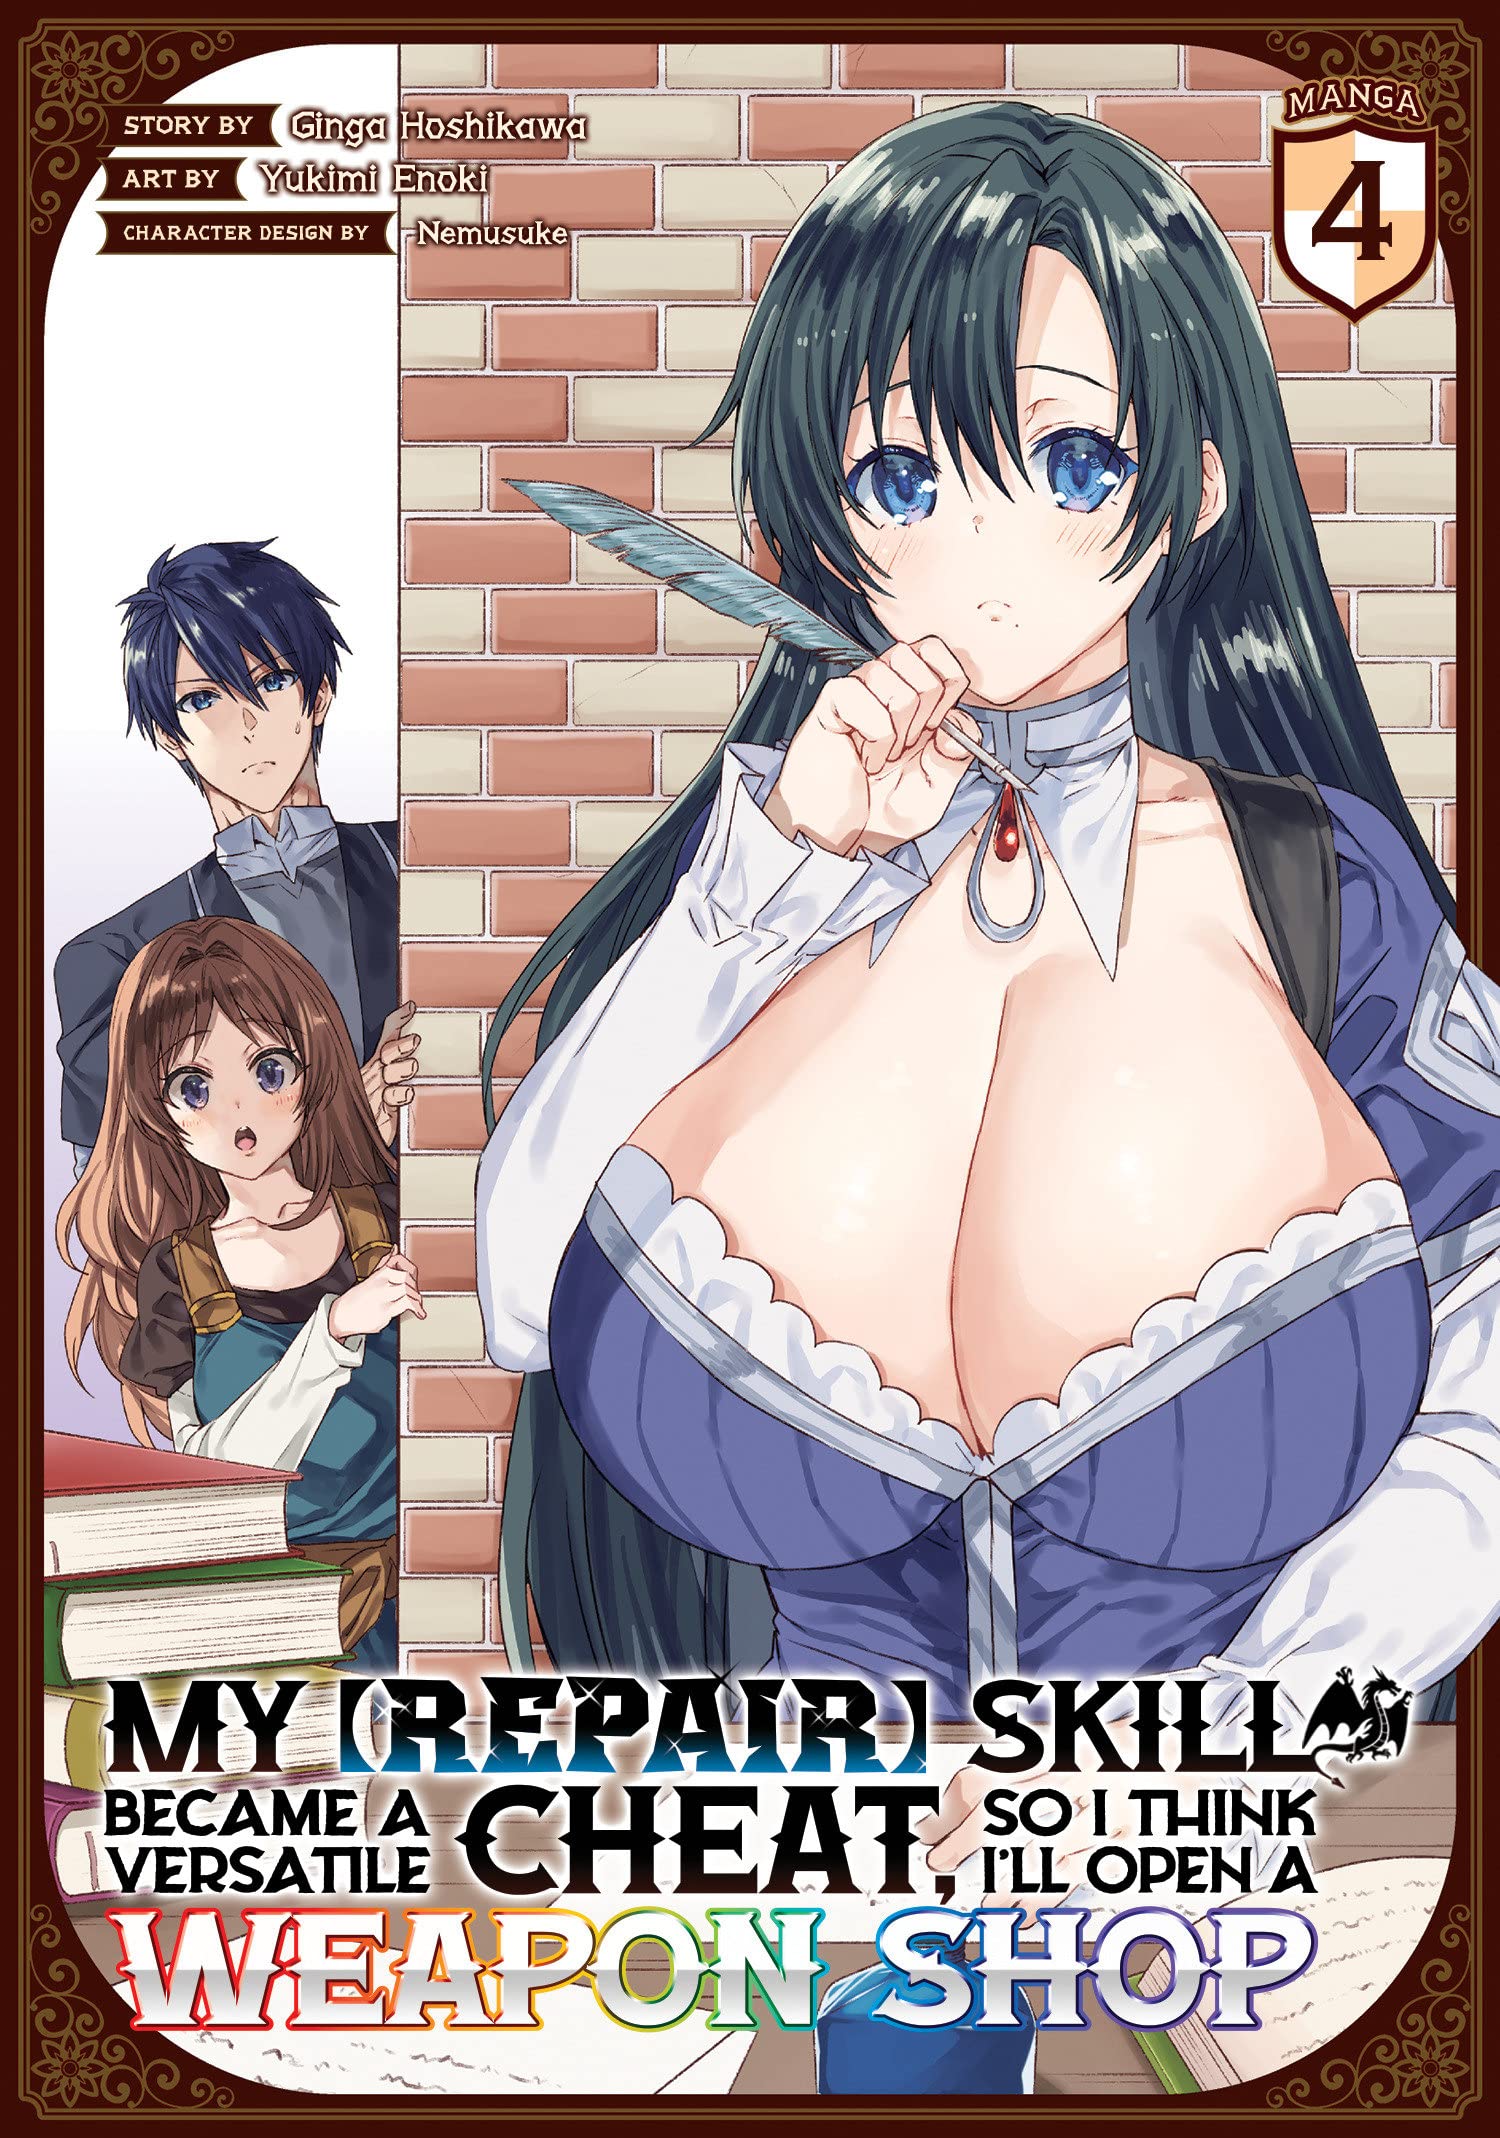 My [Repair] Skill Became a Versatile Cheat, So I Think I'll Open a Weapon Shop (Manga) Vol. 04